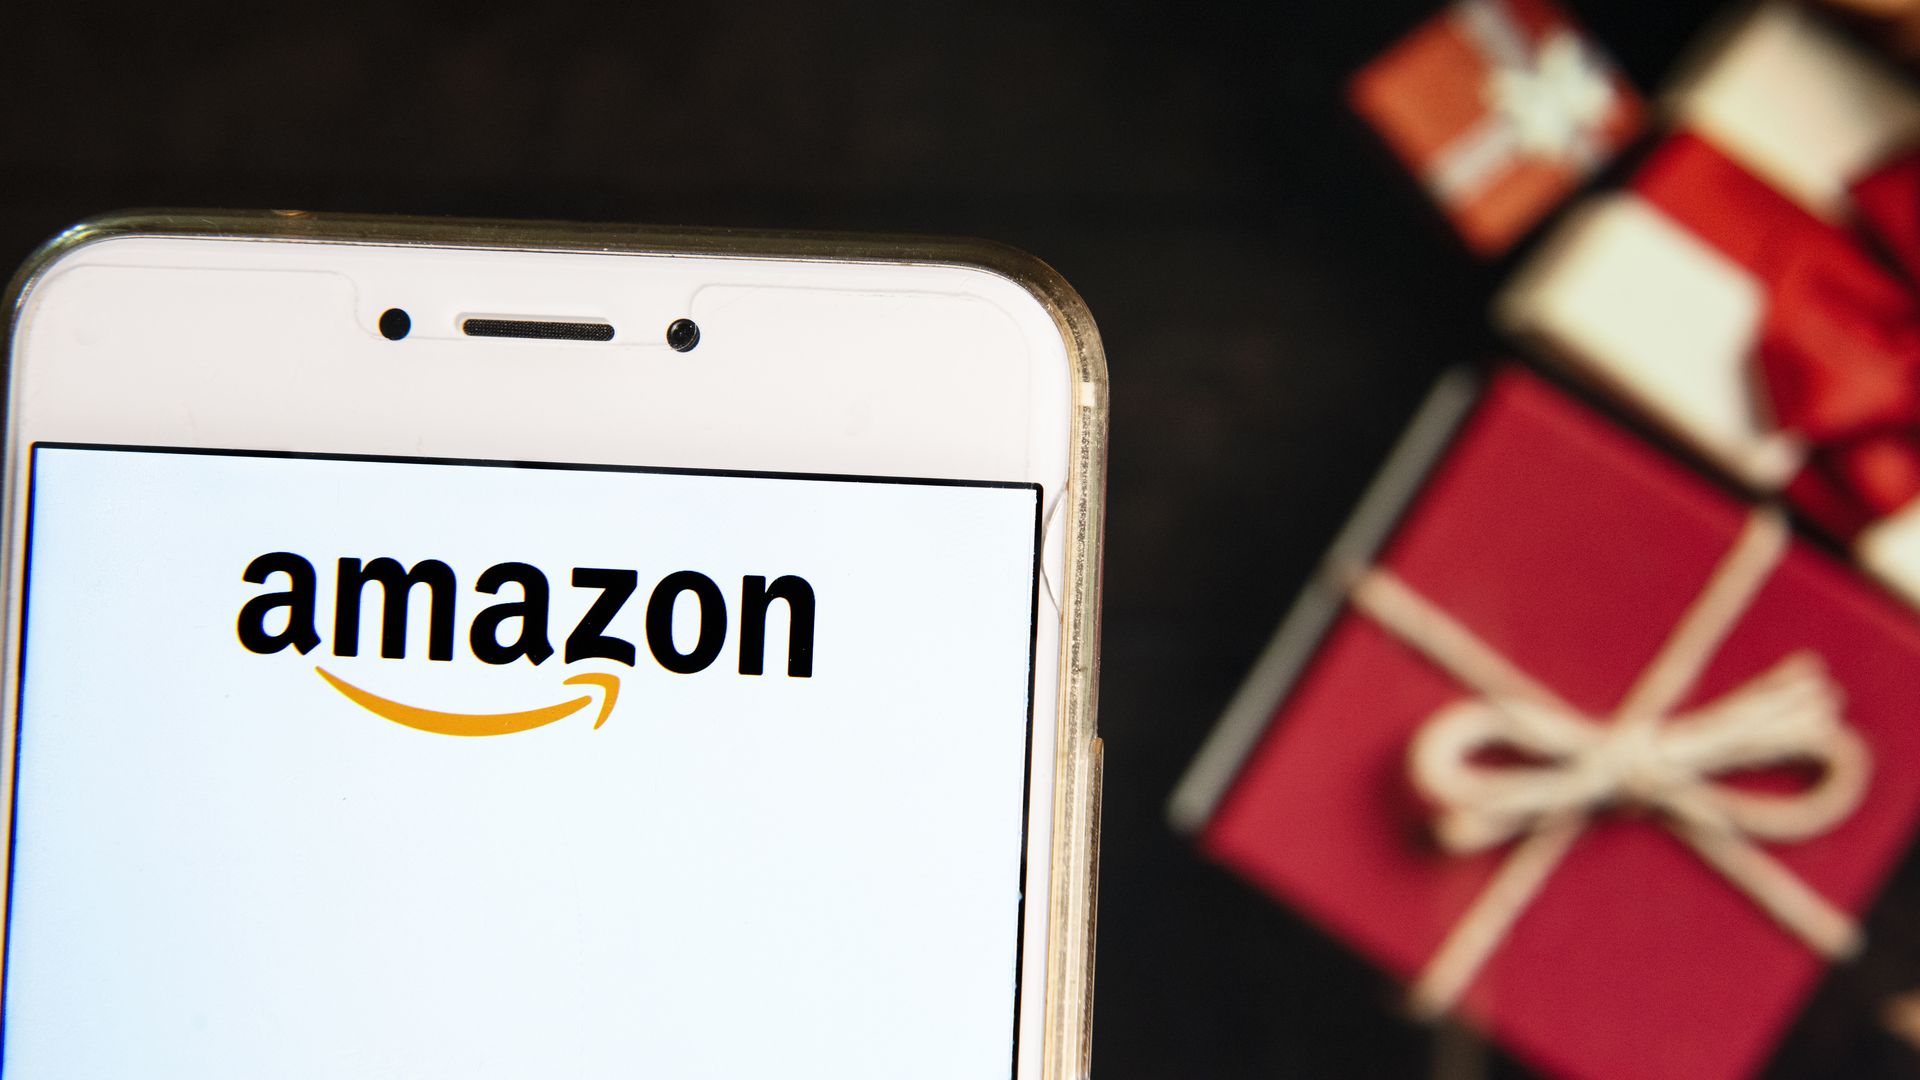 The Amazon logo on a phone screen